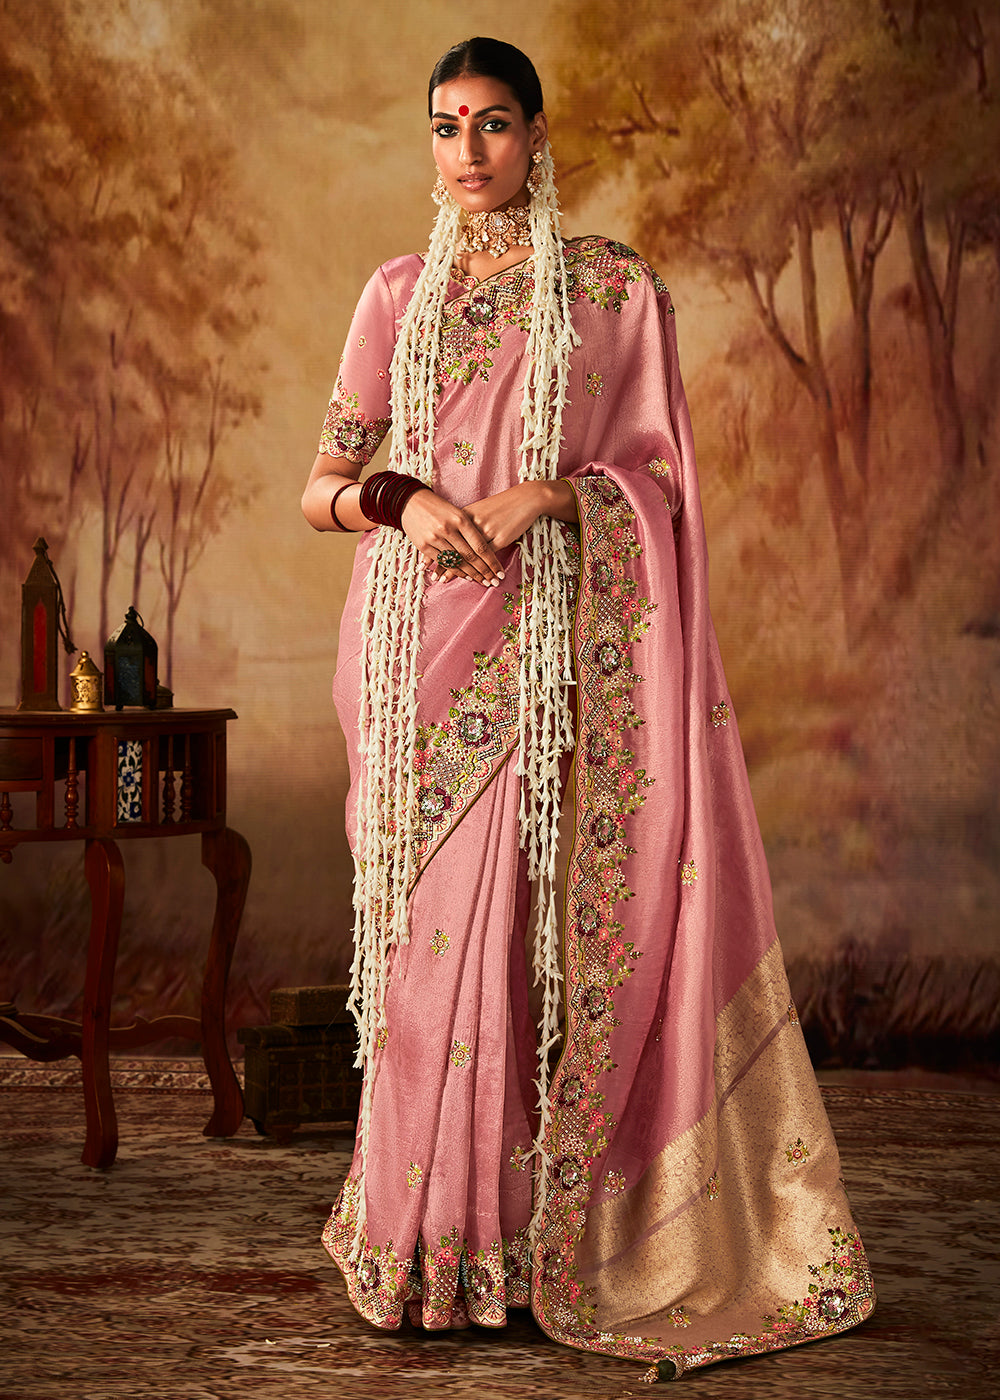 Buy Now Baby Pink Wedding Wear Embroidered Kanjivaram Silk Saree Online in USA, UK, Canada & Worldwide at Empress Clothing. 